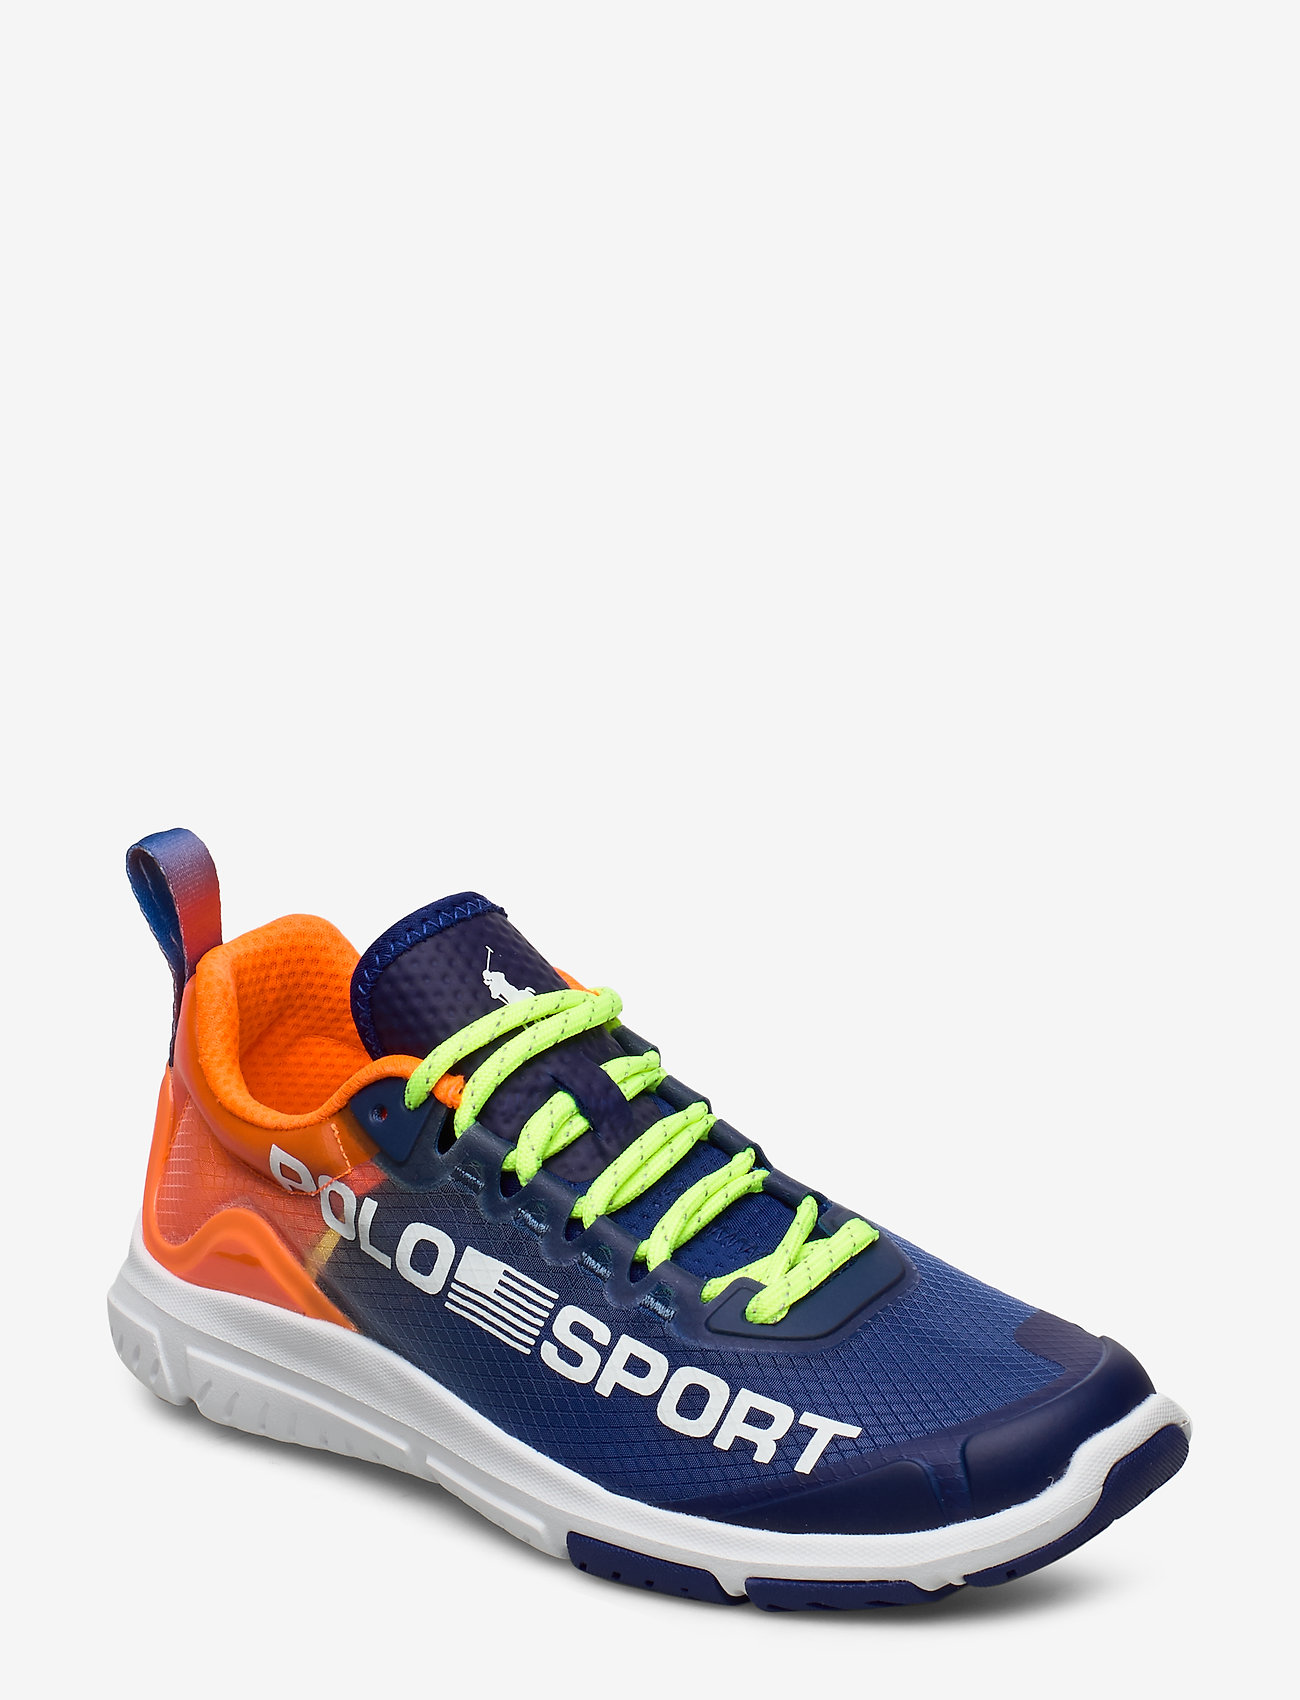 polo sport shoes